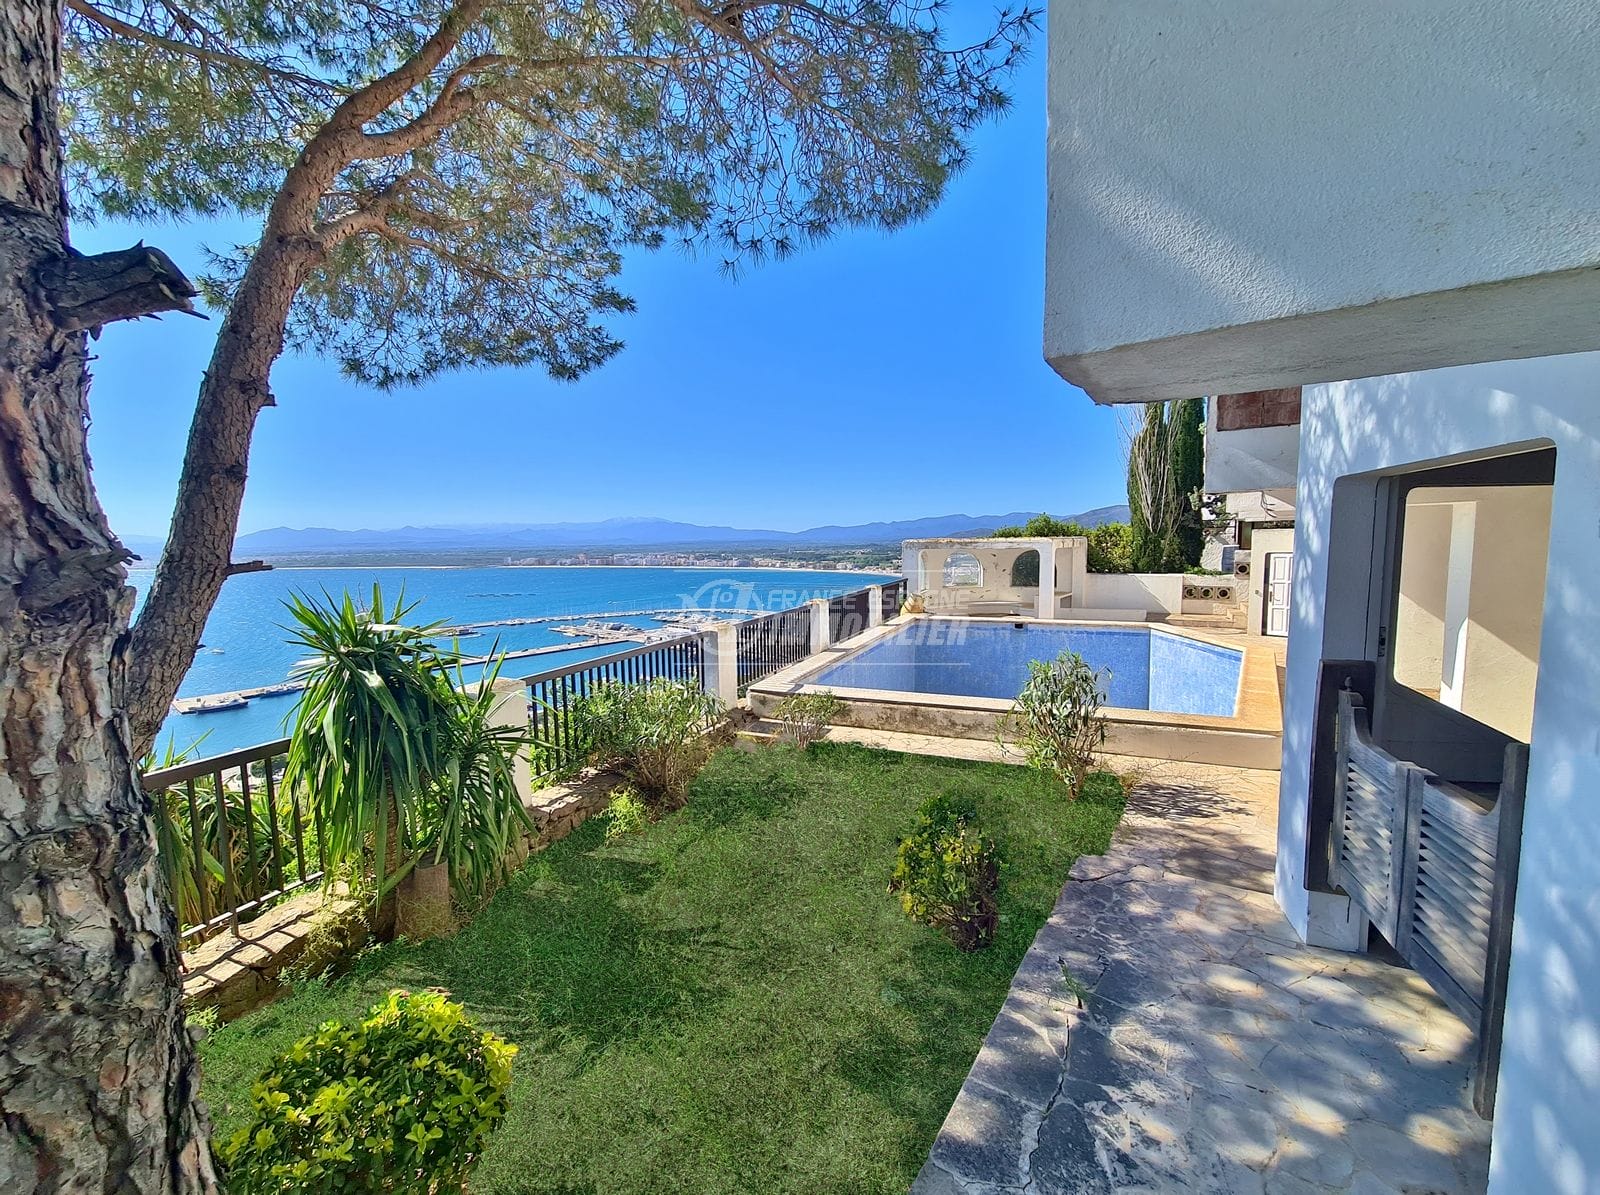 Roses - Villa 180° sea view, large swimming pool, garage 50m², beach 950m